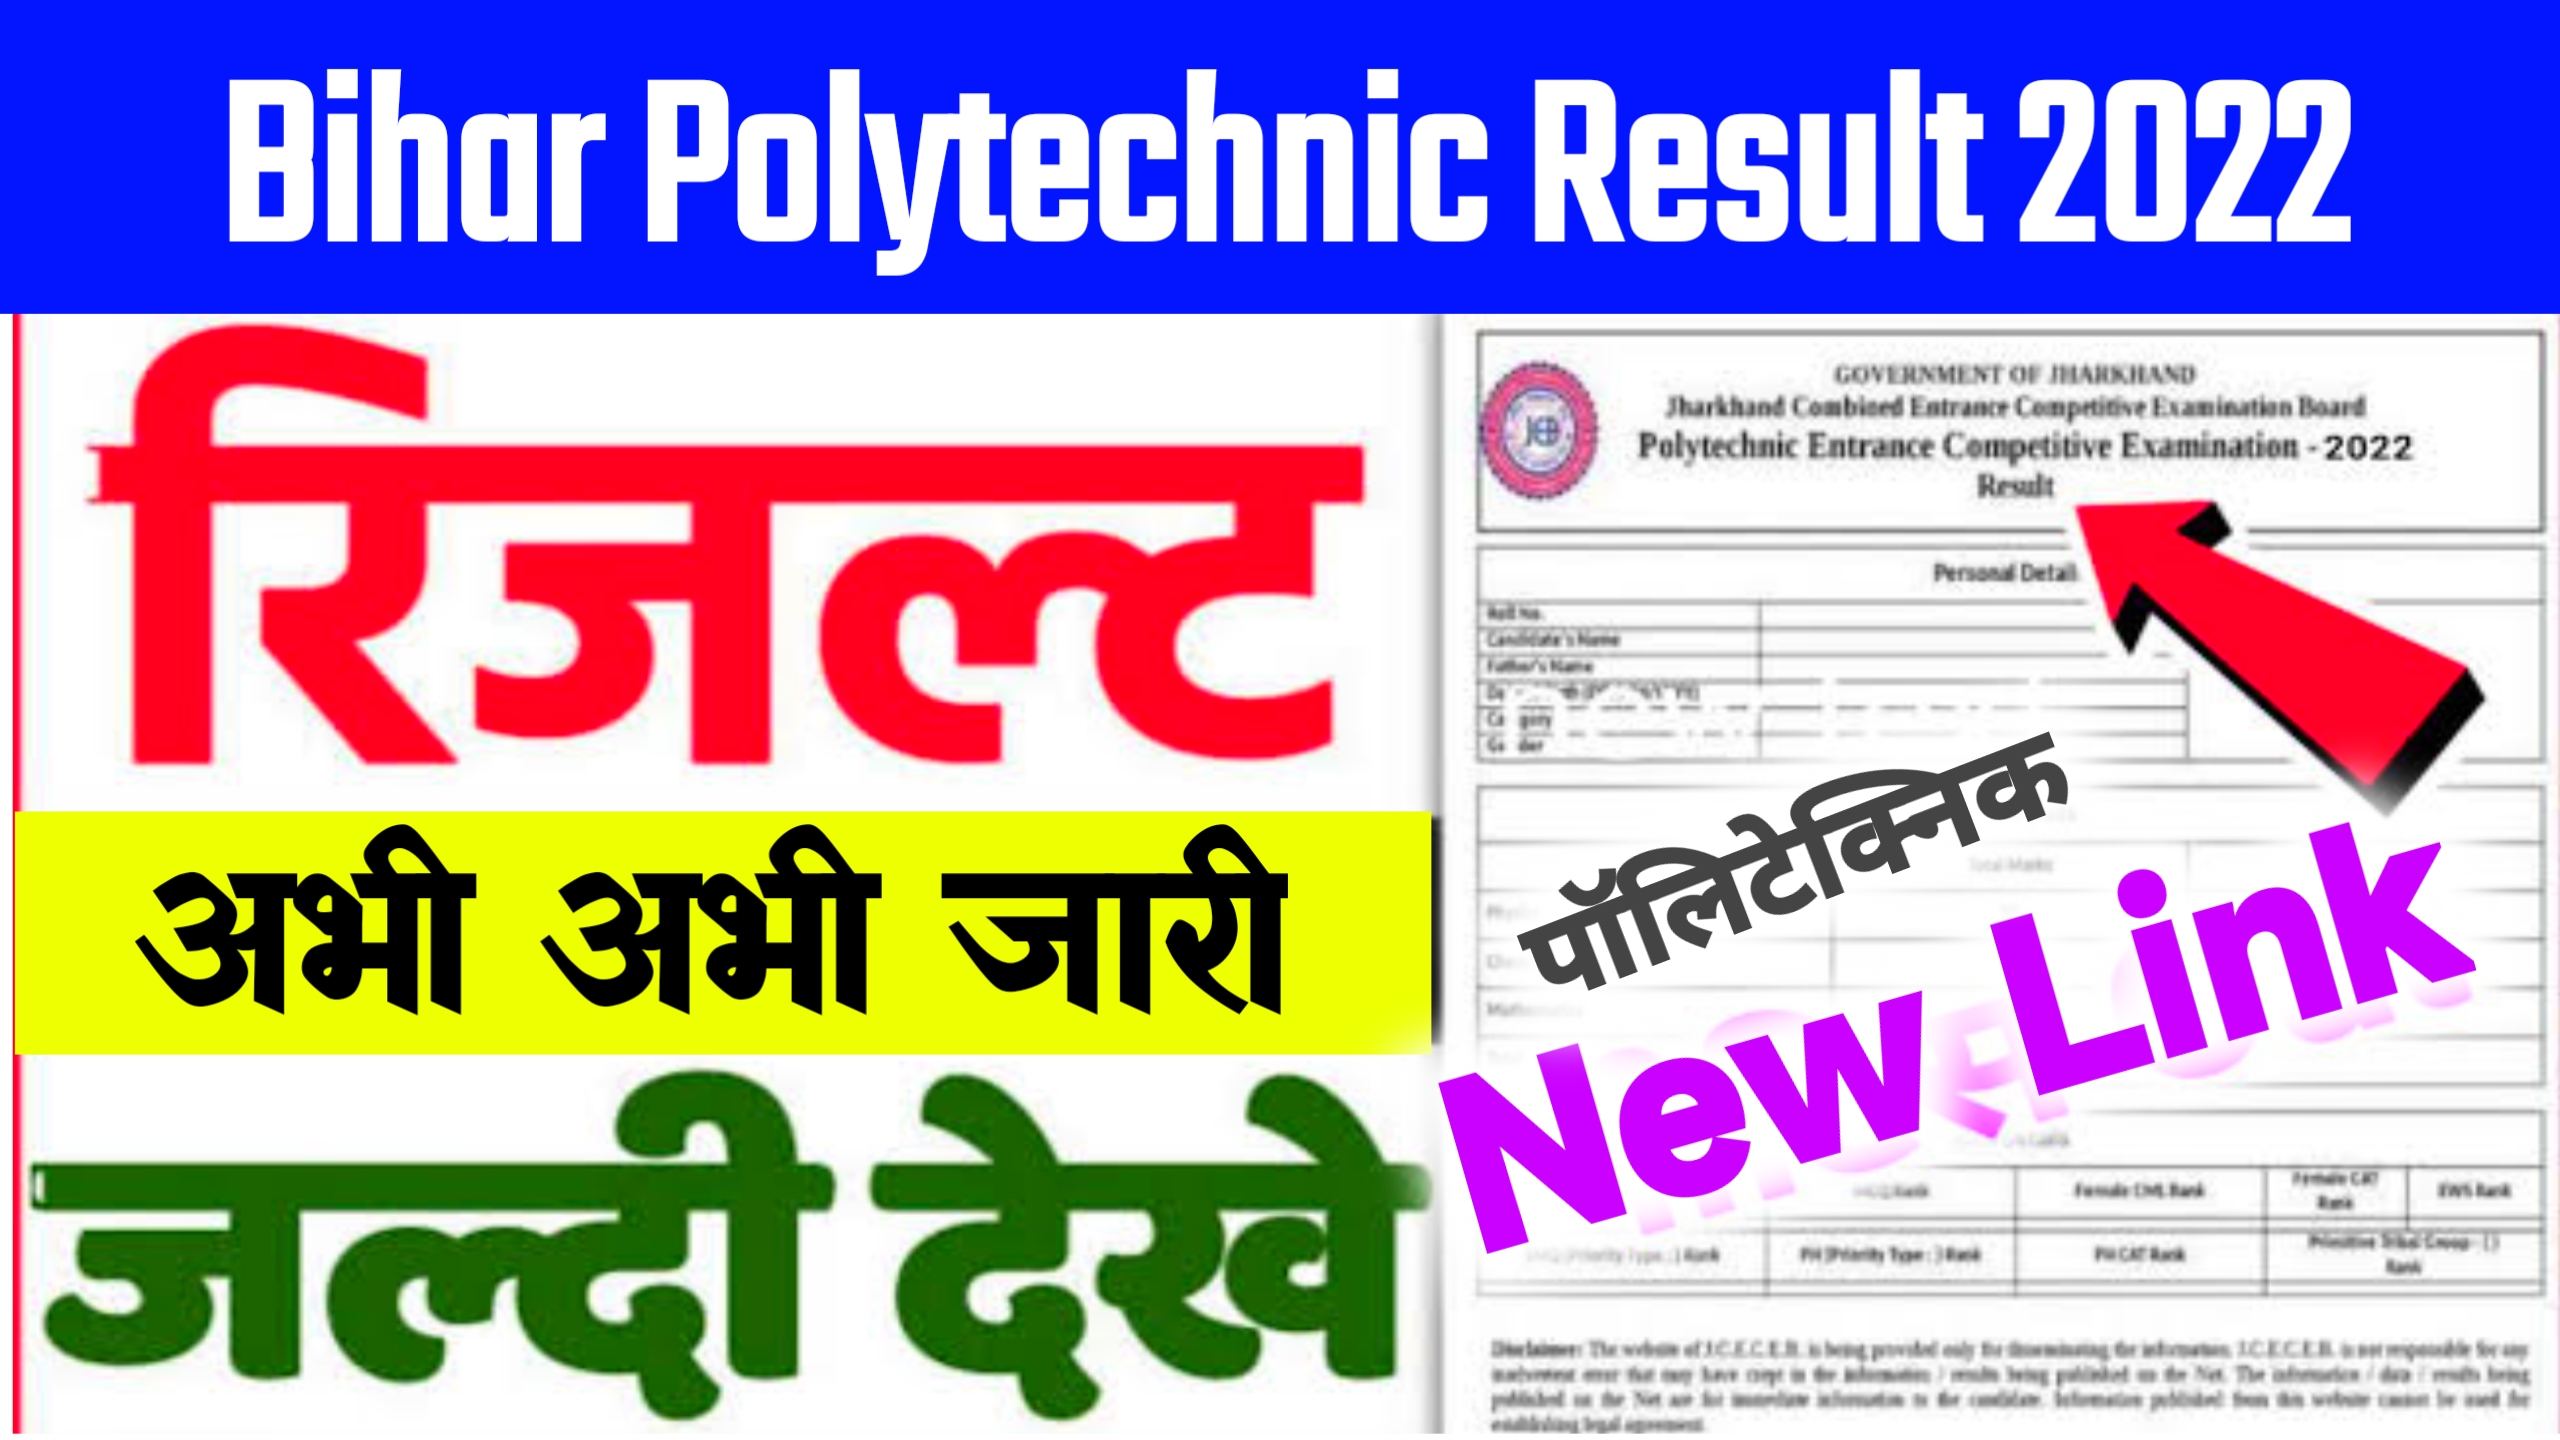 Bihar Polytechnic Result 2022 New Link @bceceboard.bihar.gov.in Result